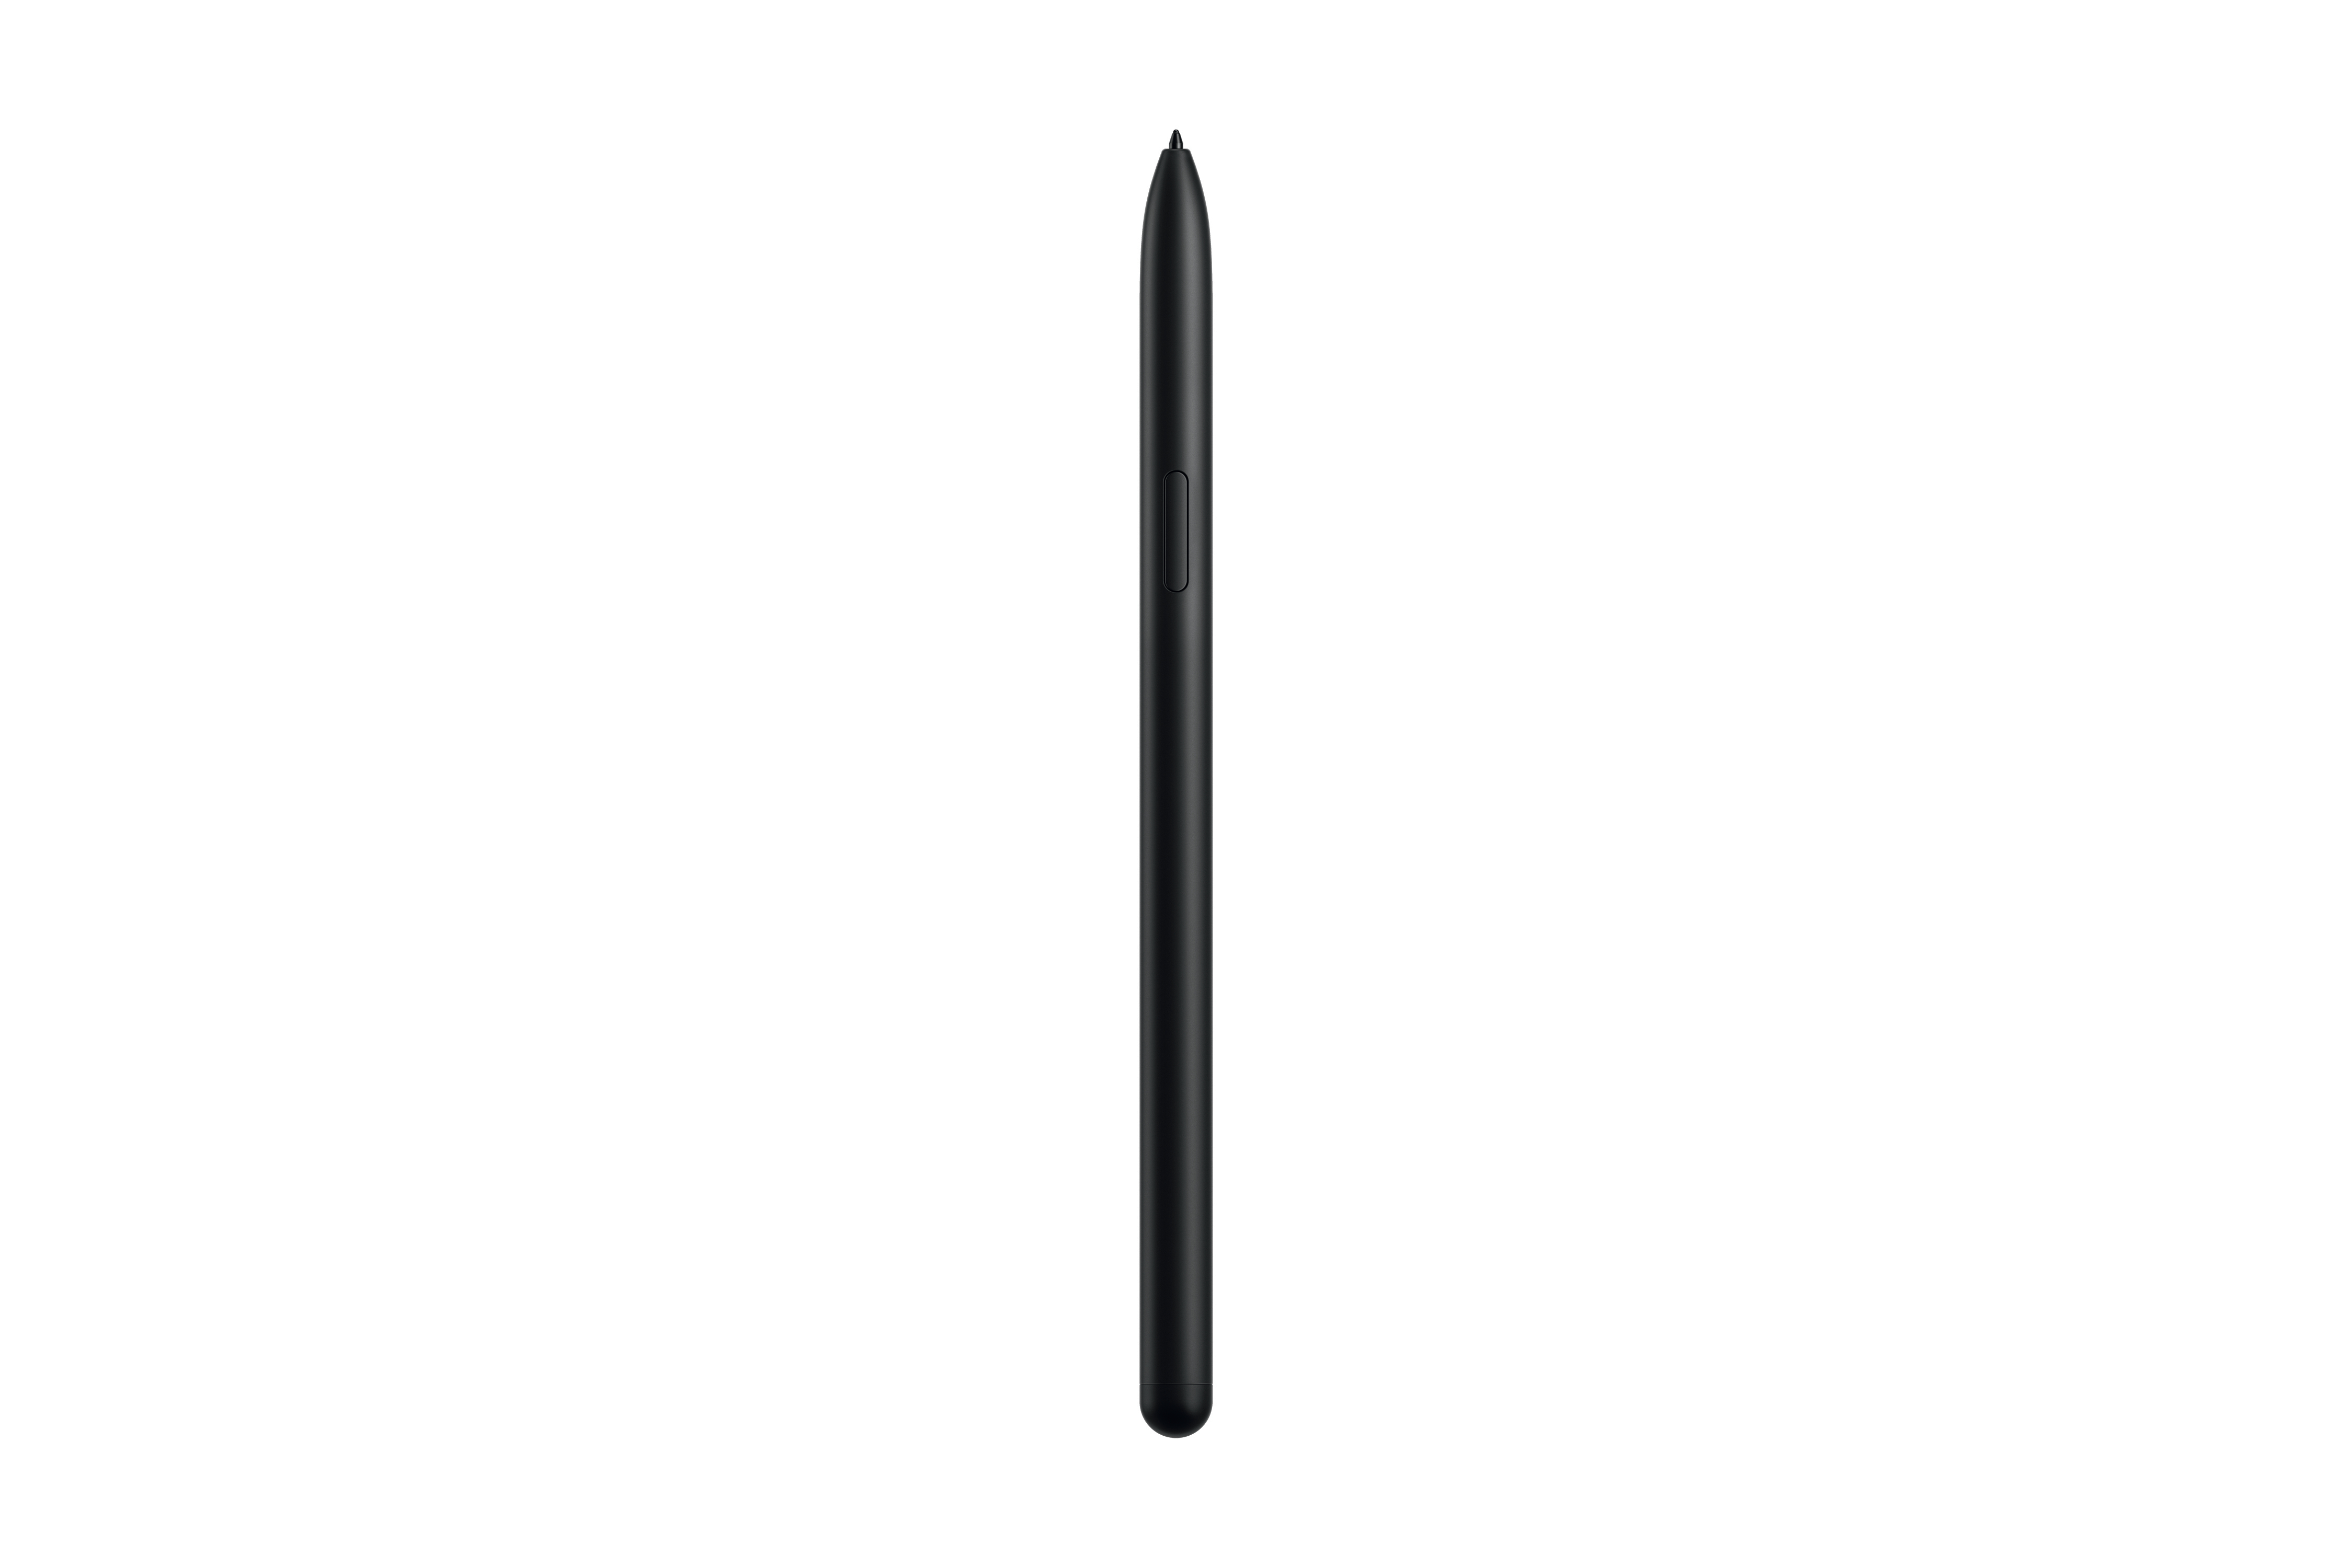 SAMSUNG Galaxy Tab Ultra, Zoll, GB, 14,6 Graphite Tablet, S9 256